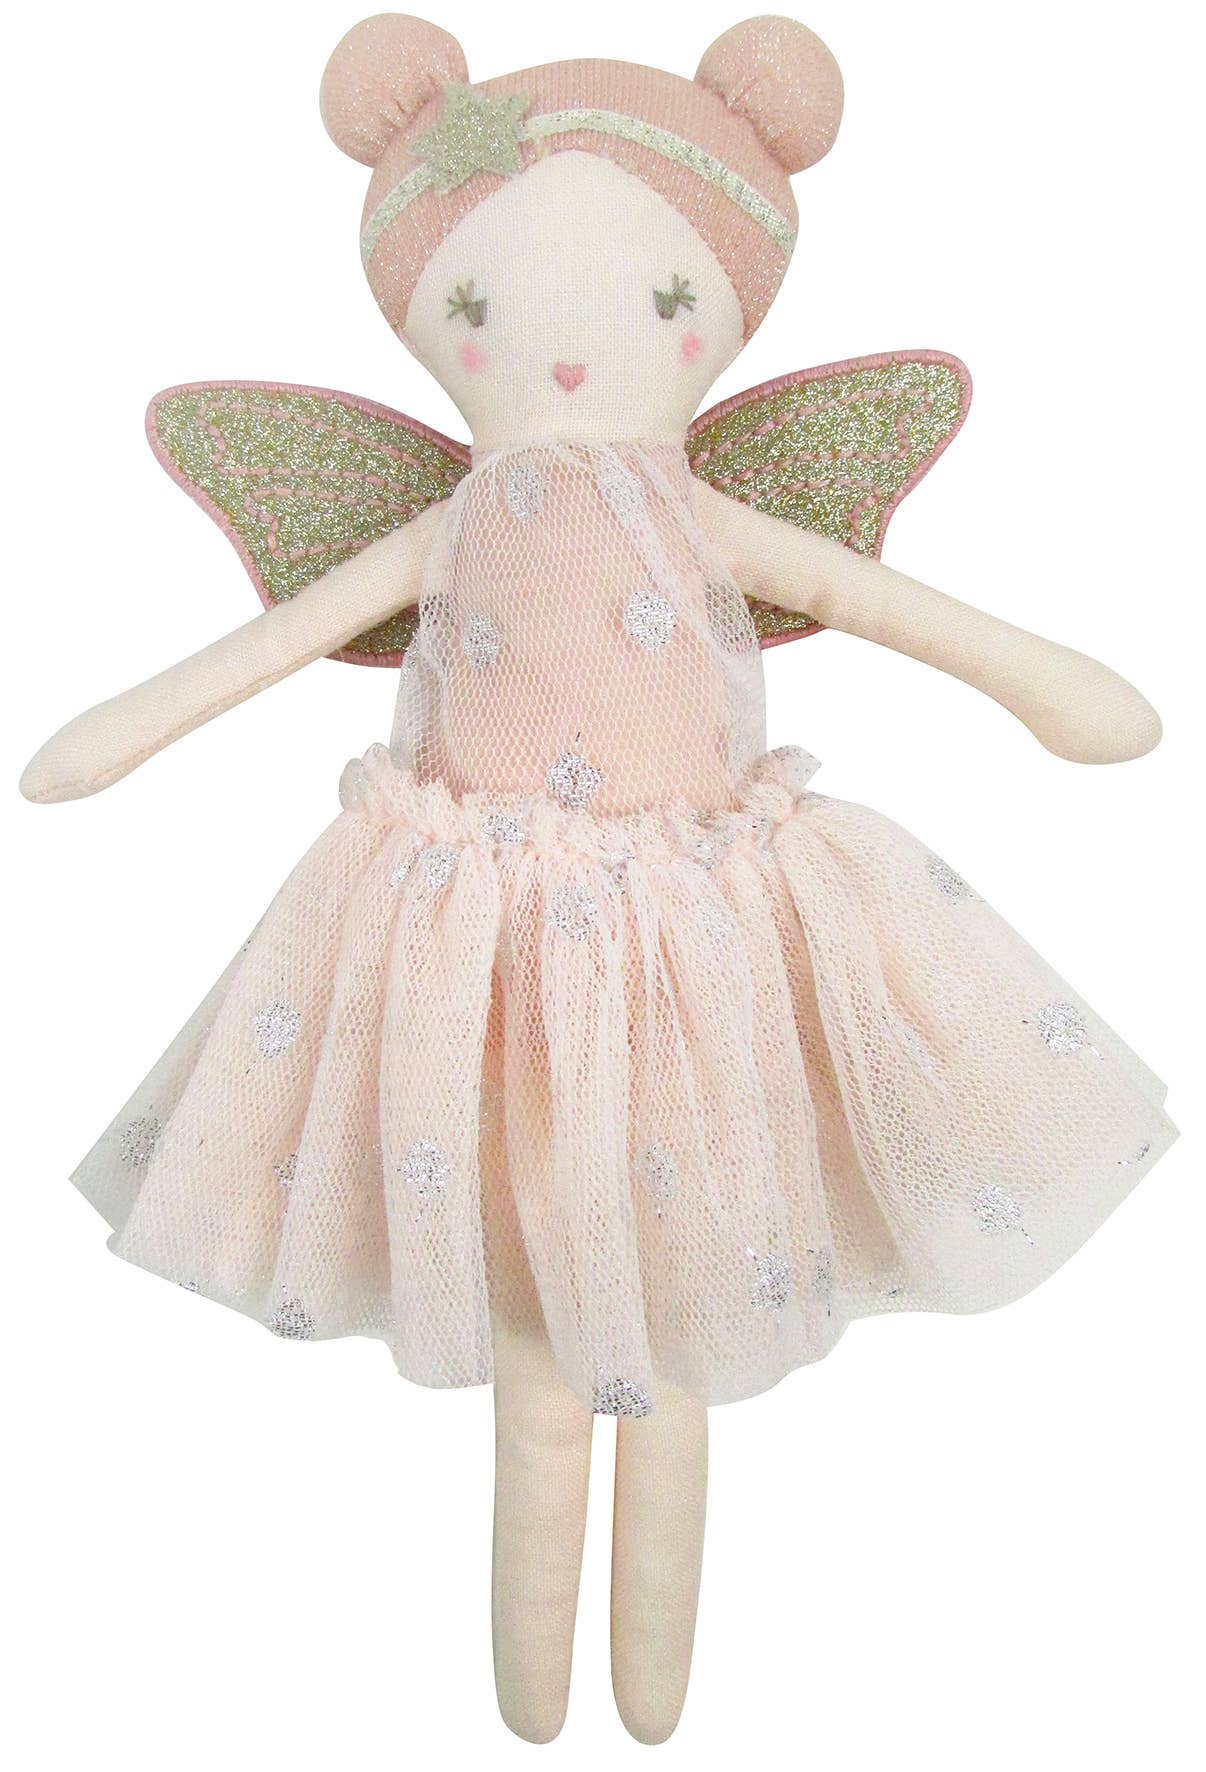 Pippa Sparkle Fairy Linen Doll